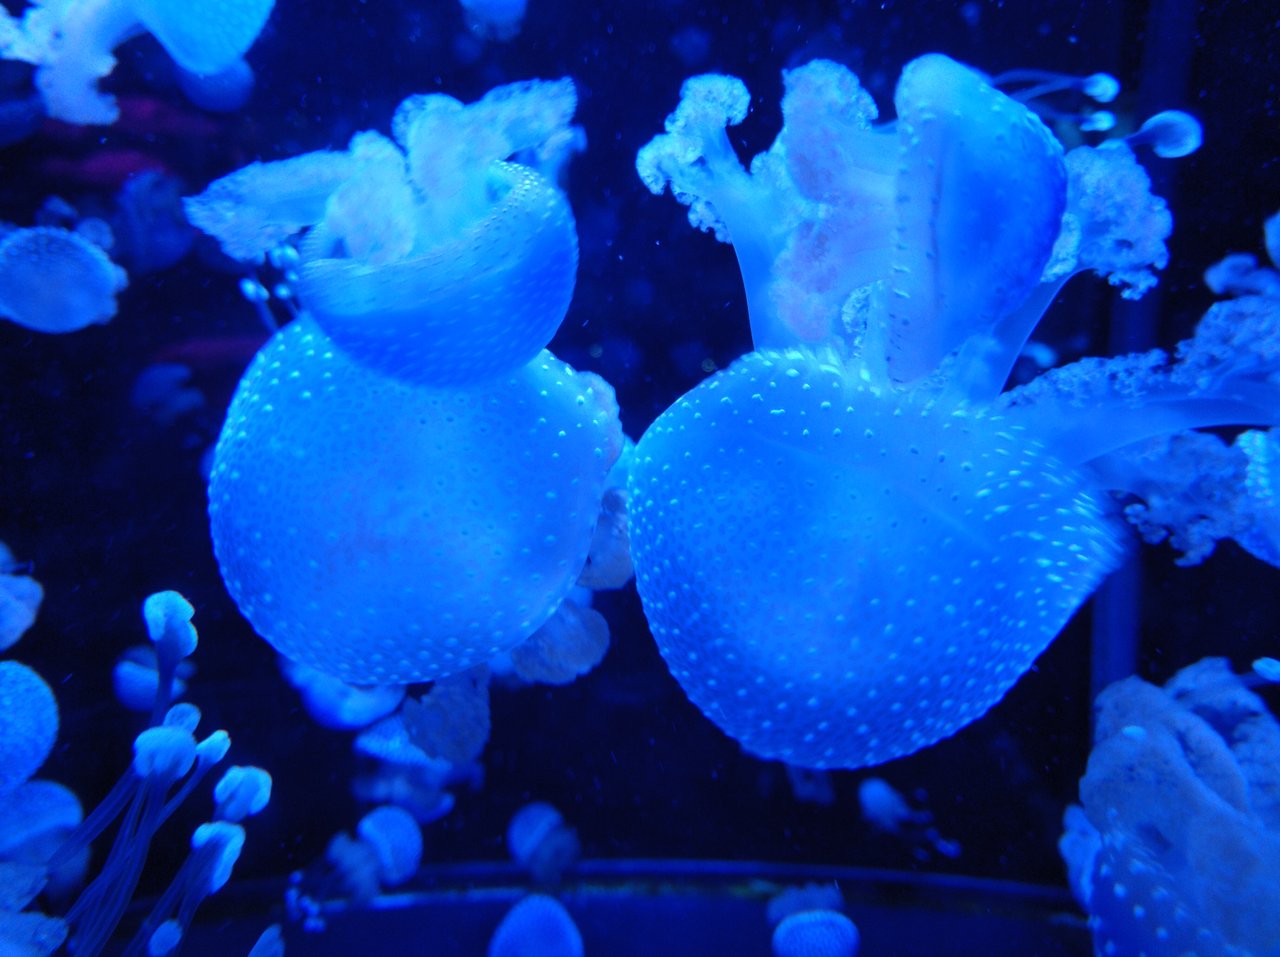 Jellyfish in Quebec aquarium, MyNaturePhotography challenge 12/09/19 PeakD image